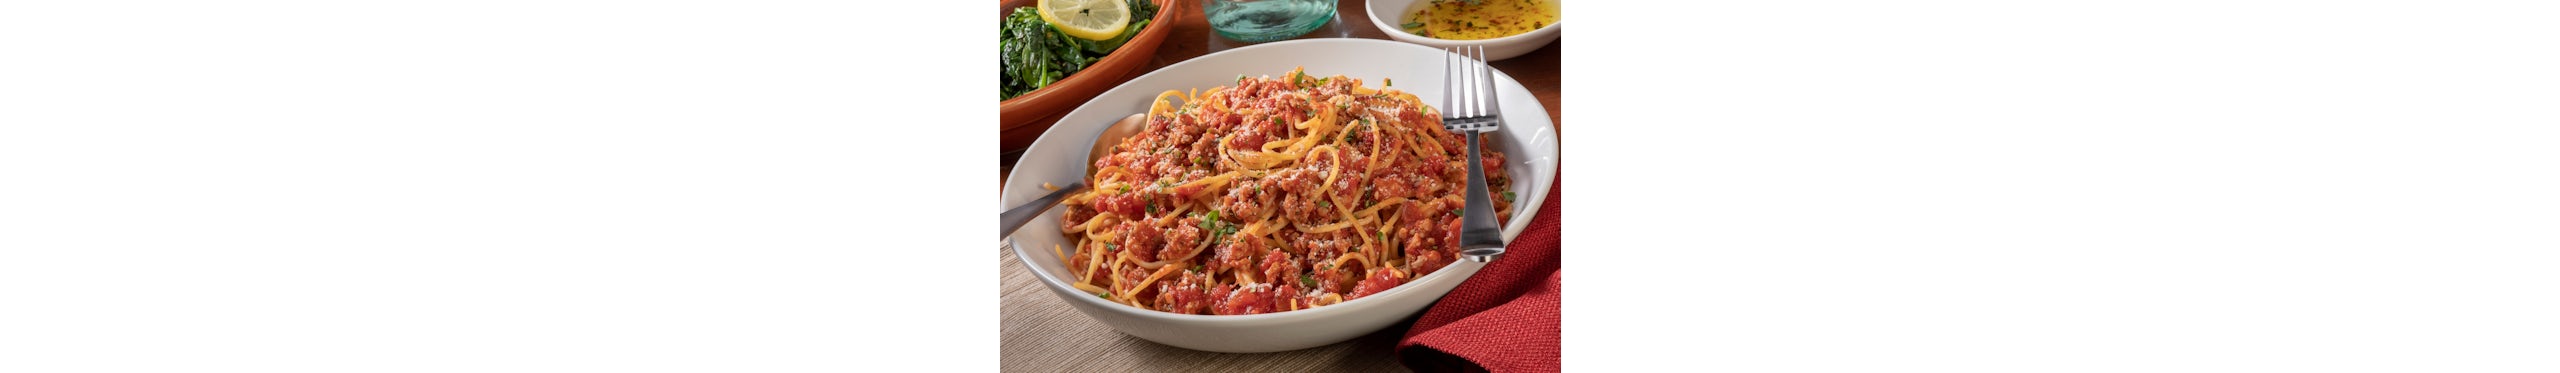 Spaghetti & Meat Sauce